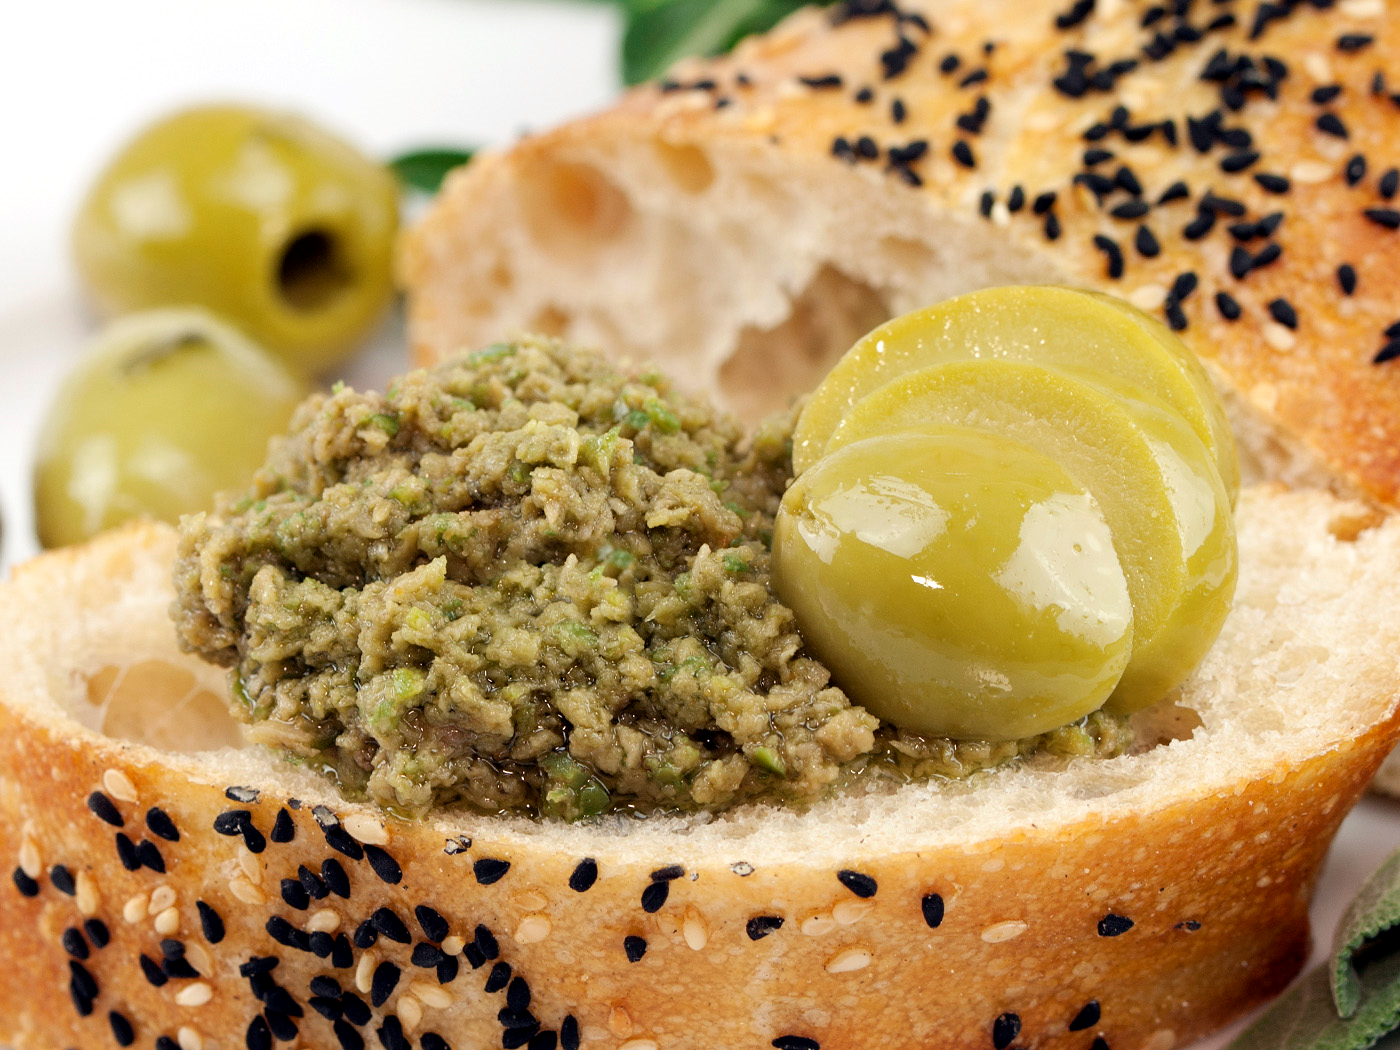 Paté di olive verdi (Bio)